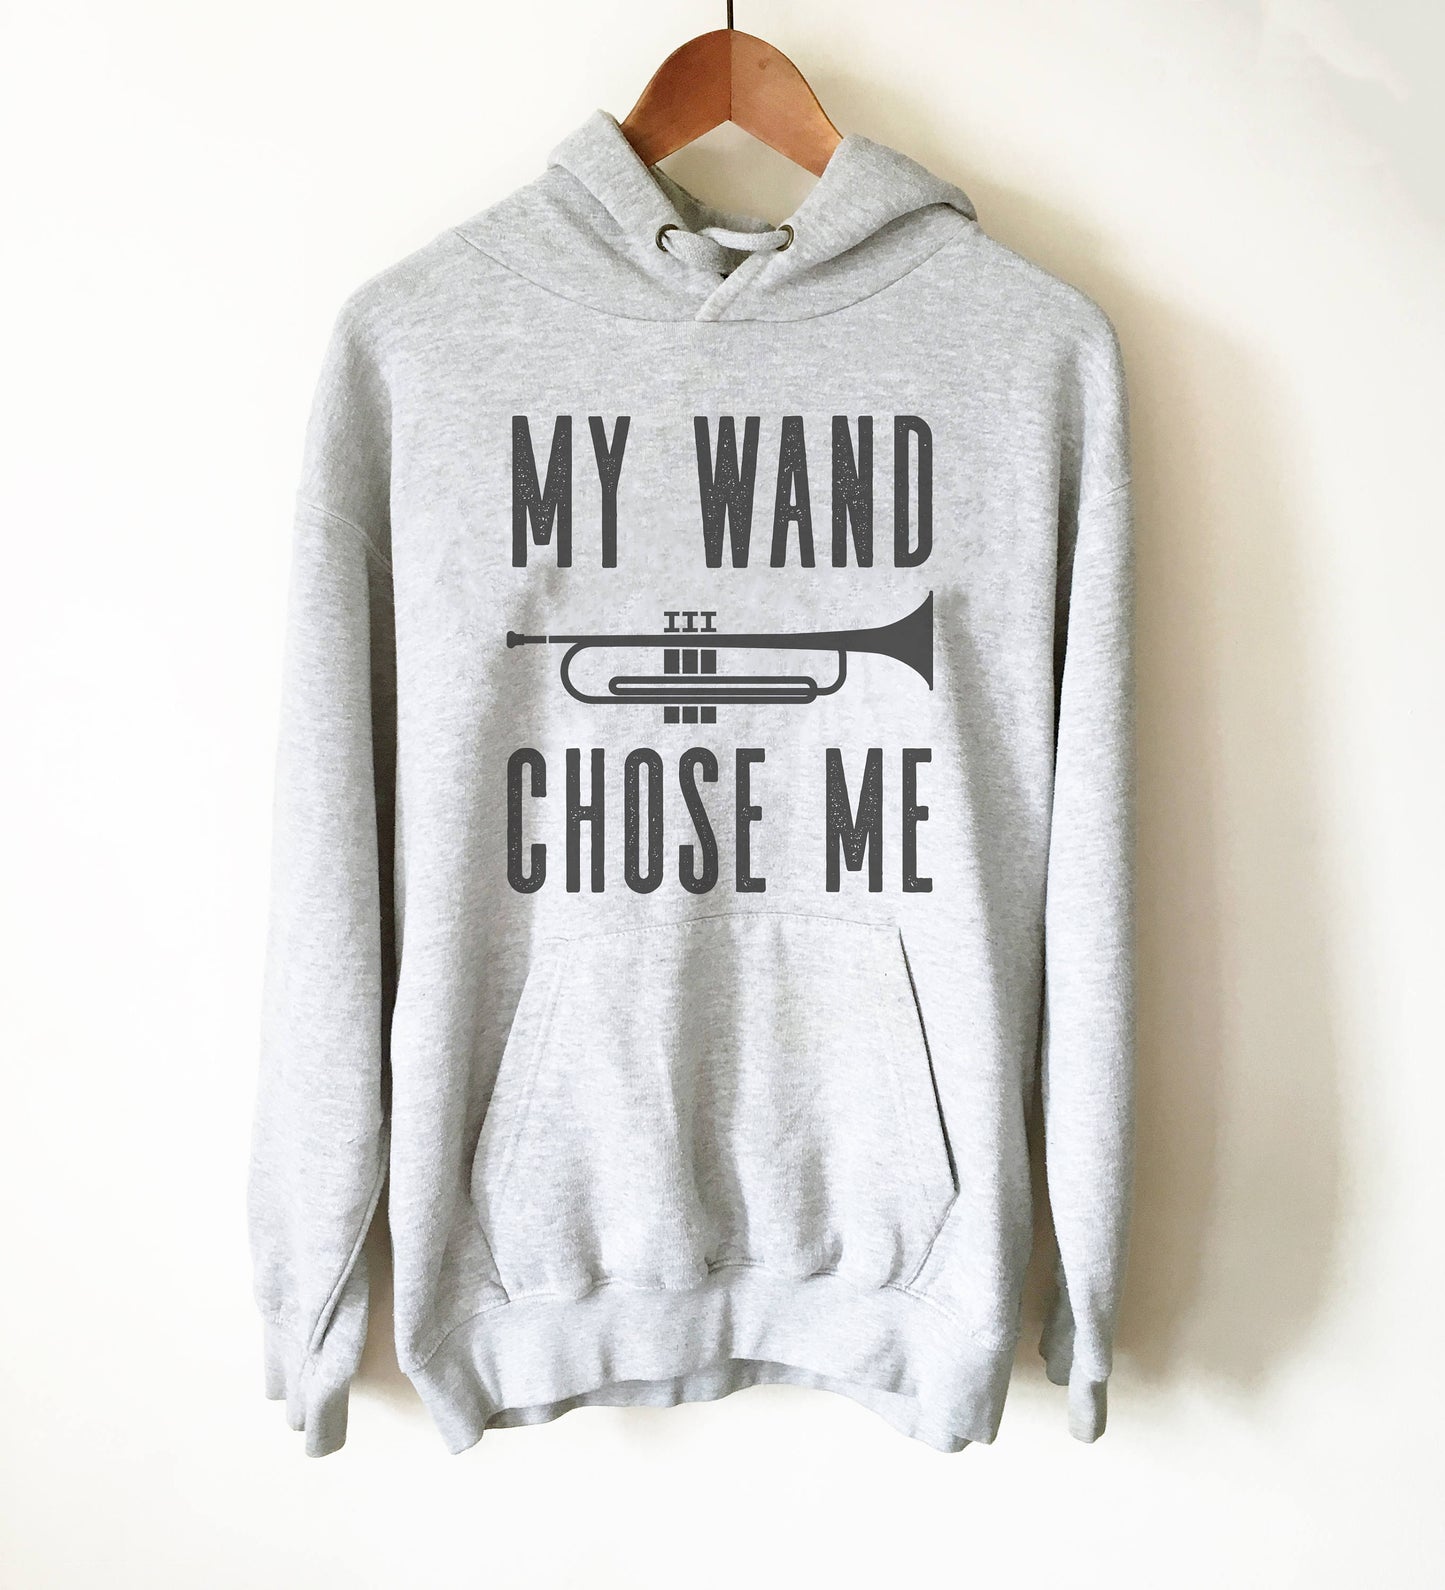 My Wand Chose Me Hoodie - Trumpet hoodie, Trumpet shirt, Trumpet gift, Trumpet player, Musician gift, Marching band shirt, Band shirt